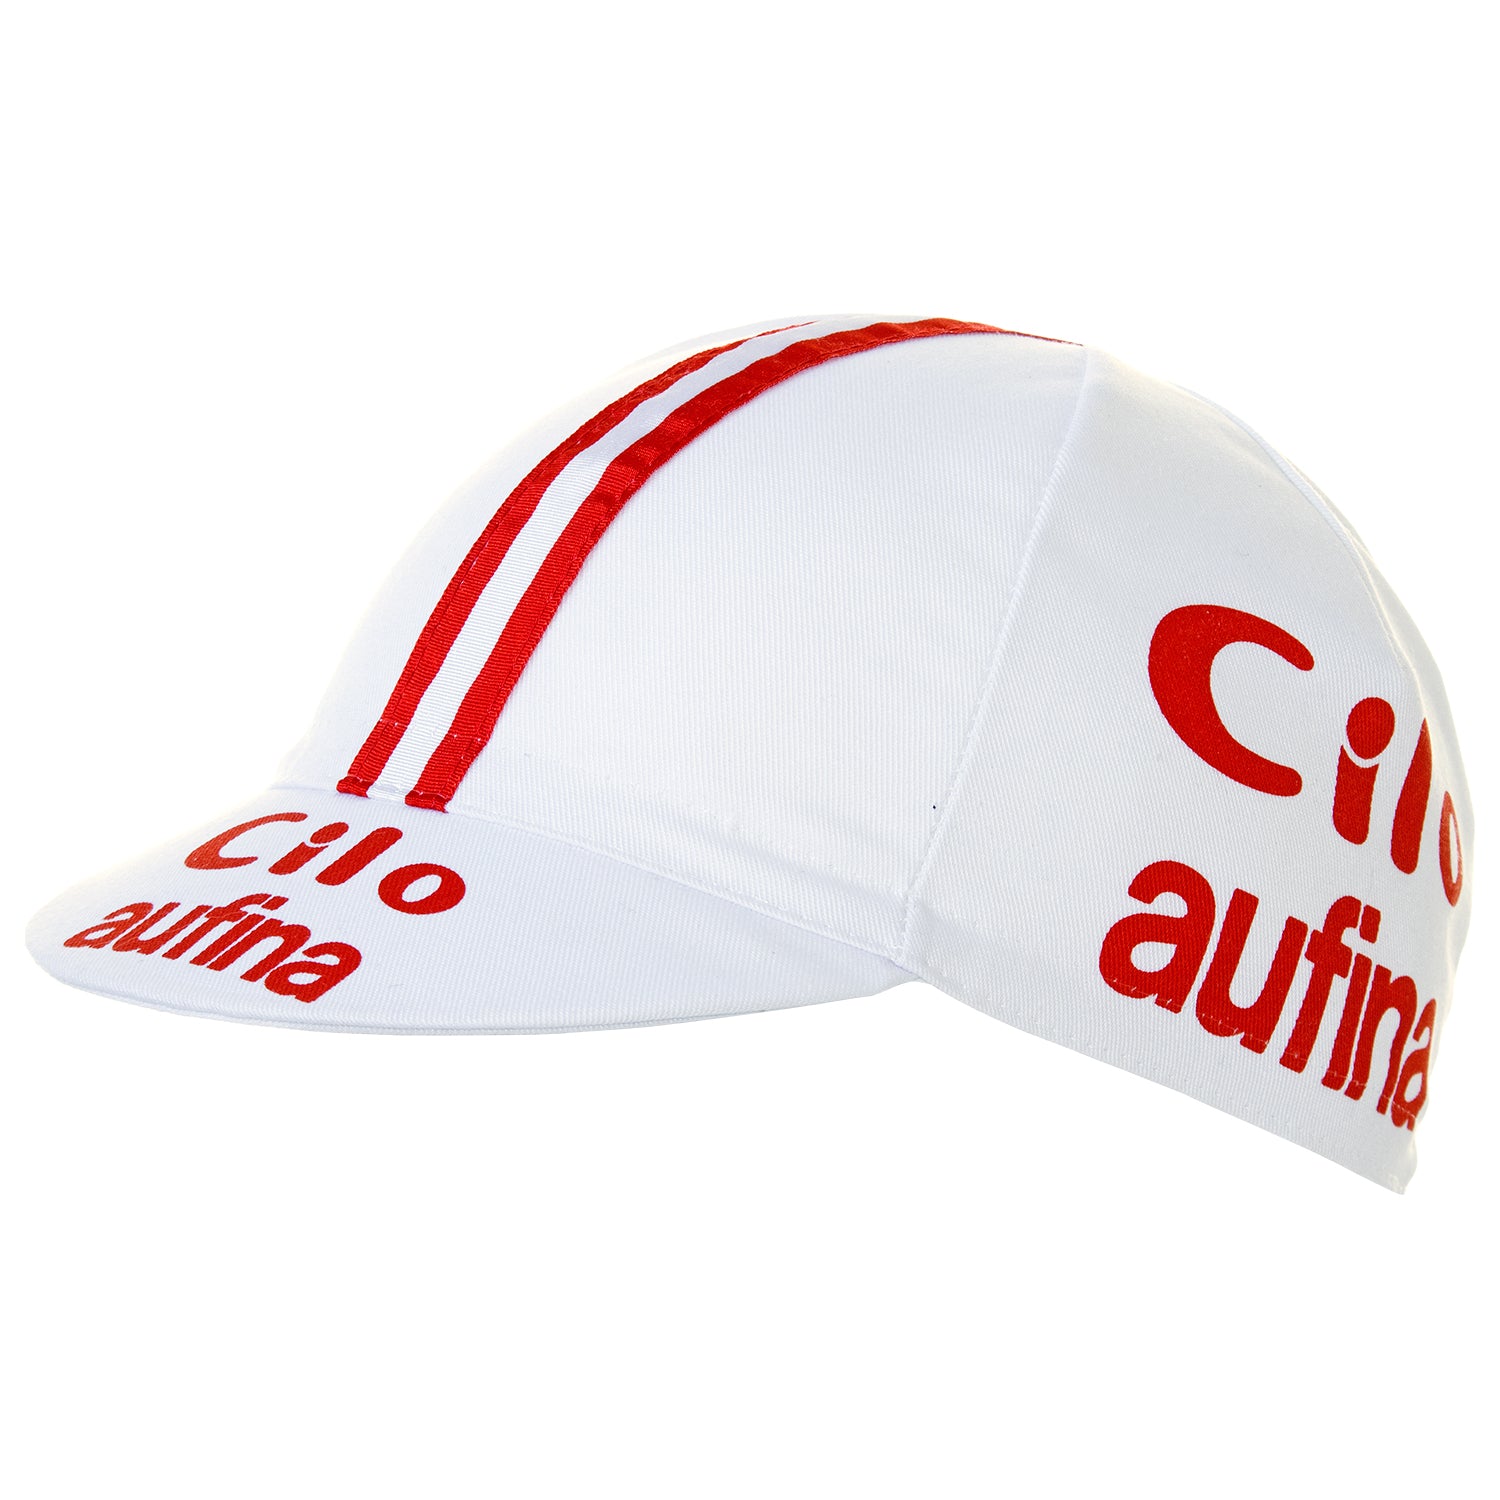 Cilo/Aufina Retro Cotton Cycling Cap